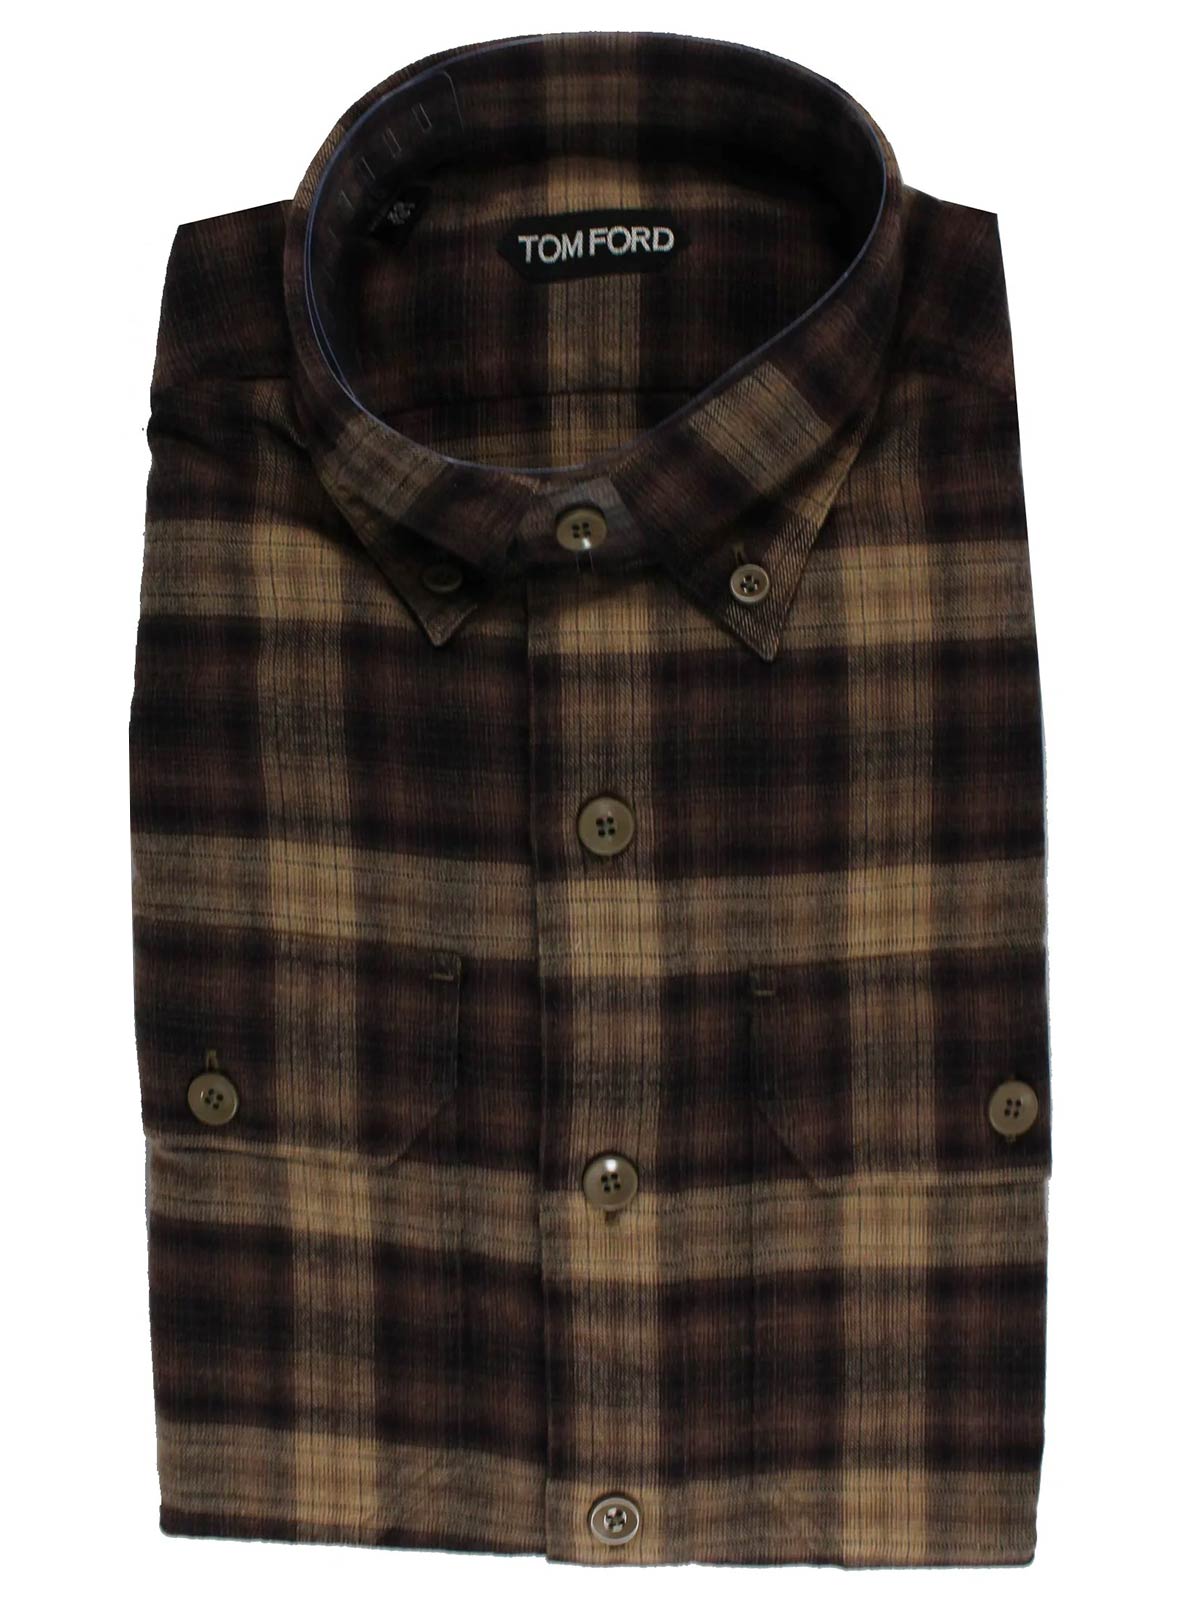 Tom Ford Sport Shirt Brown